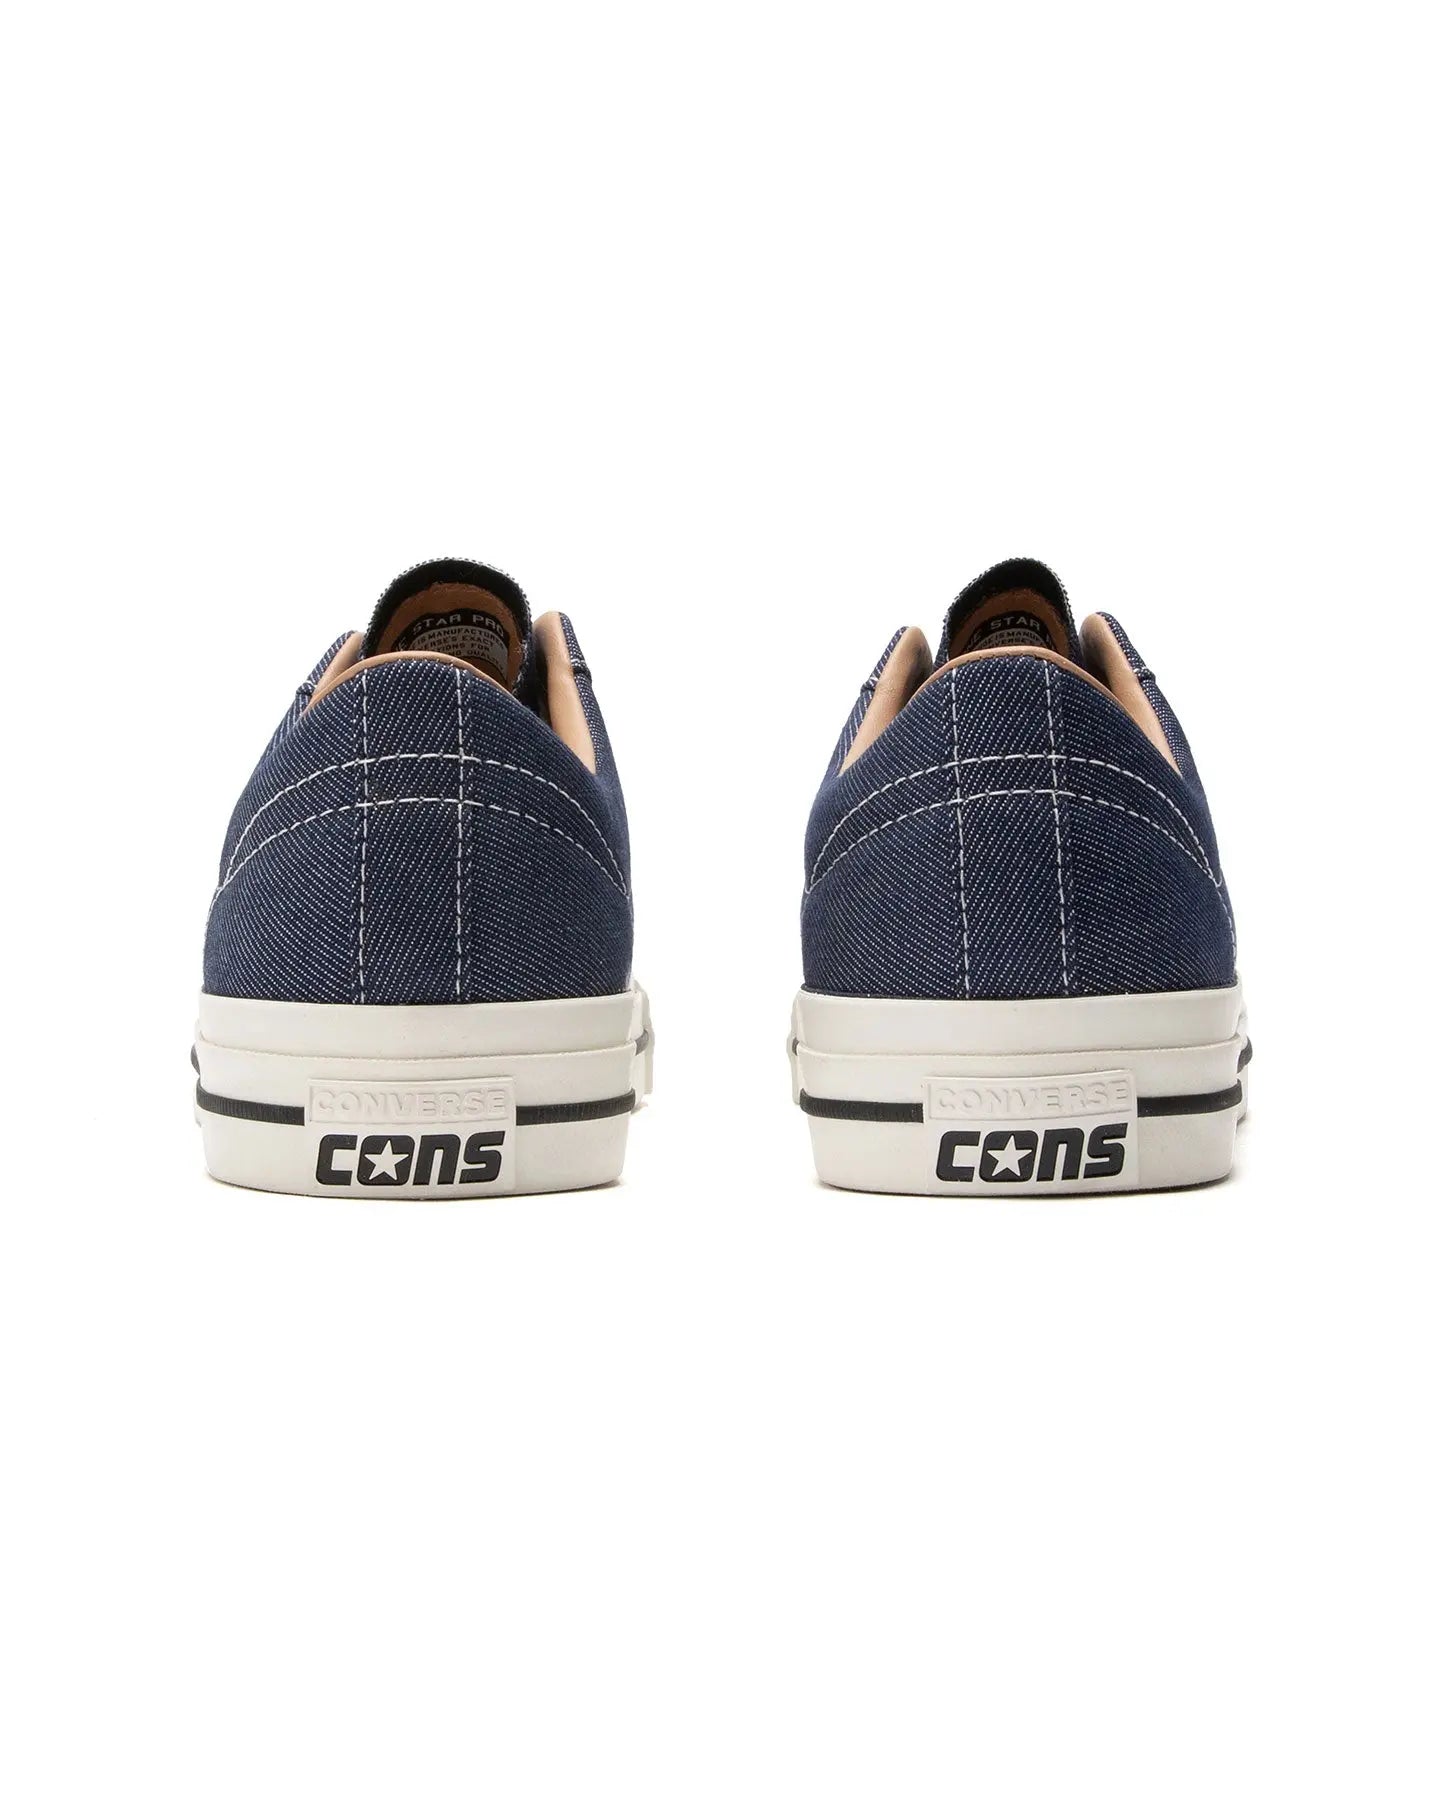 Cons One Star Pro Denim - Navy / Midnight / Egret Footwear